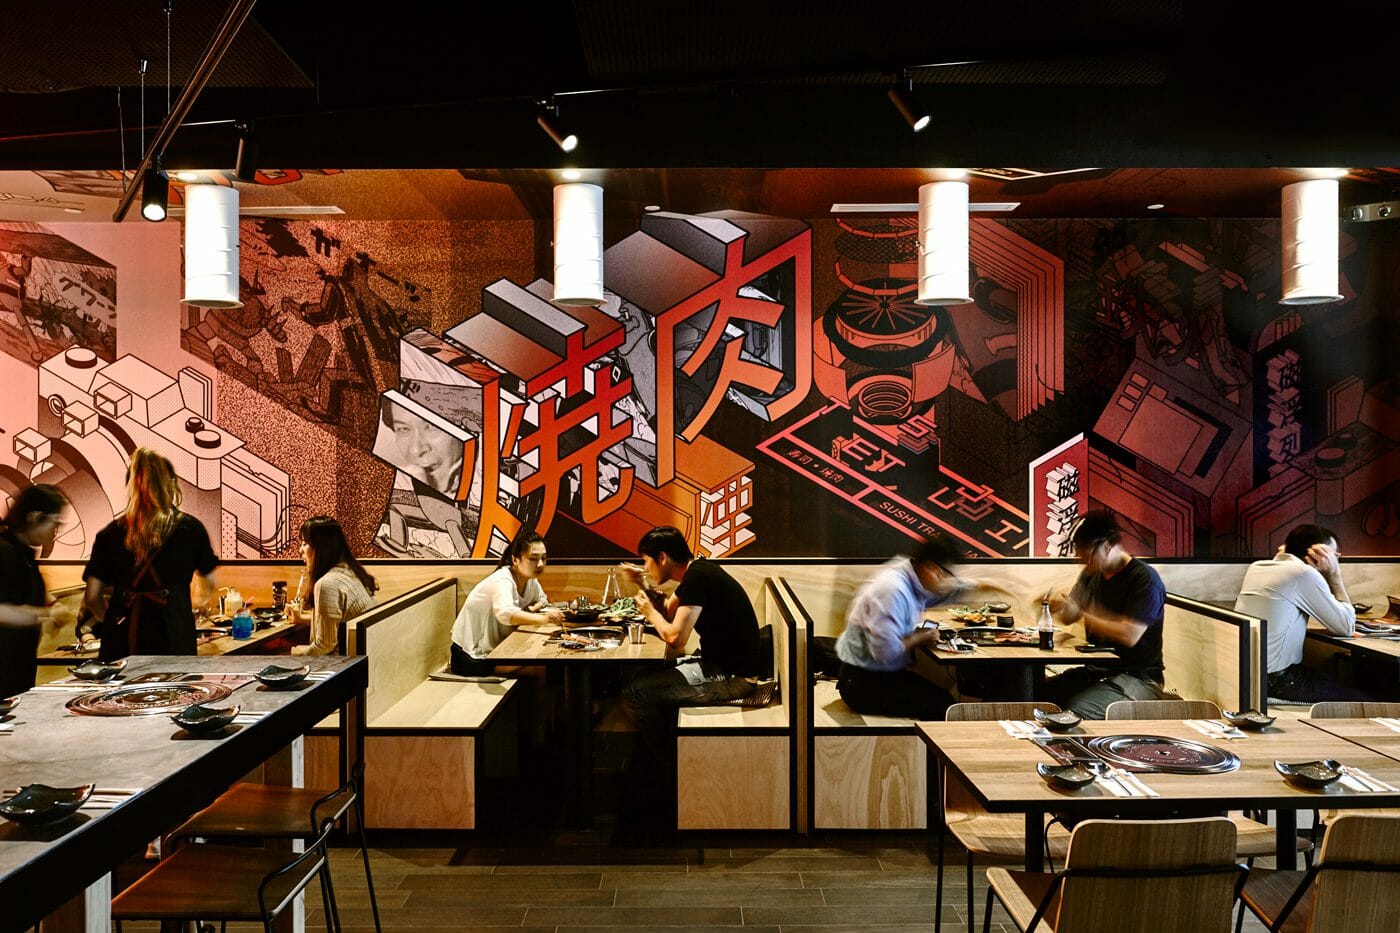 Tetsujin Japanese Restaurant_Brand Identity and Signage Wall Design_Principle Design